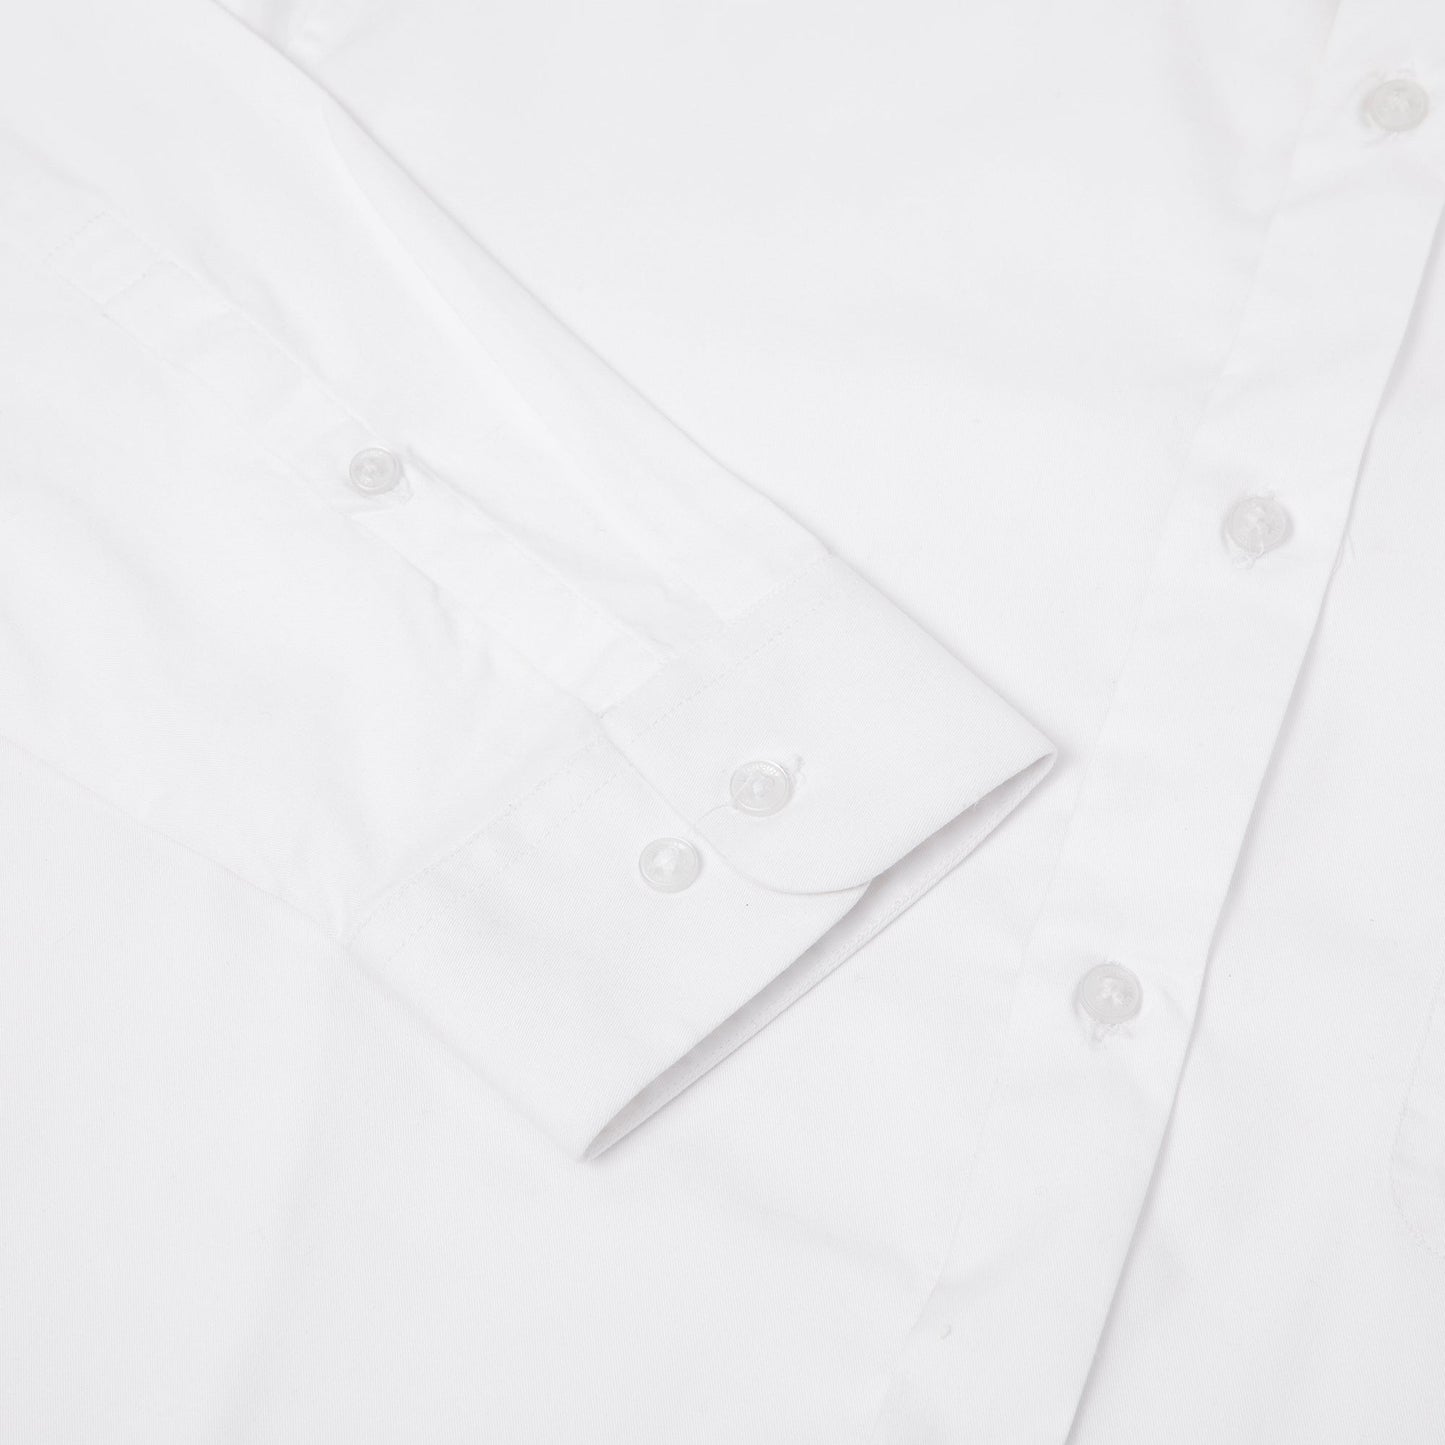 Cotton Lycra Formal Shirt in White- Slim Fit